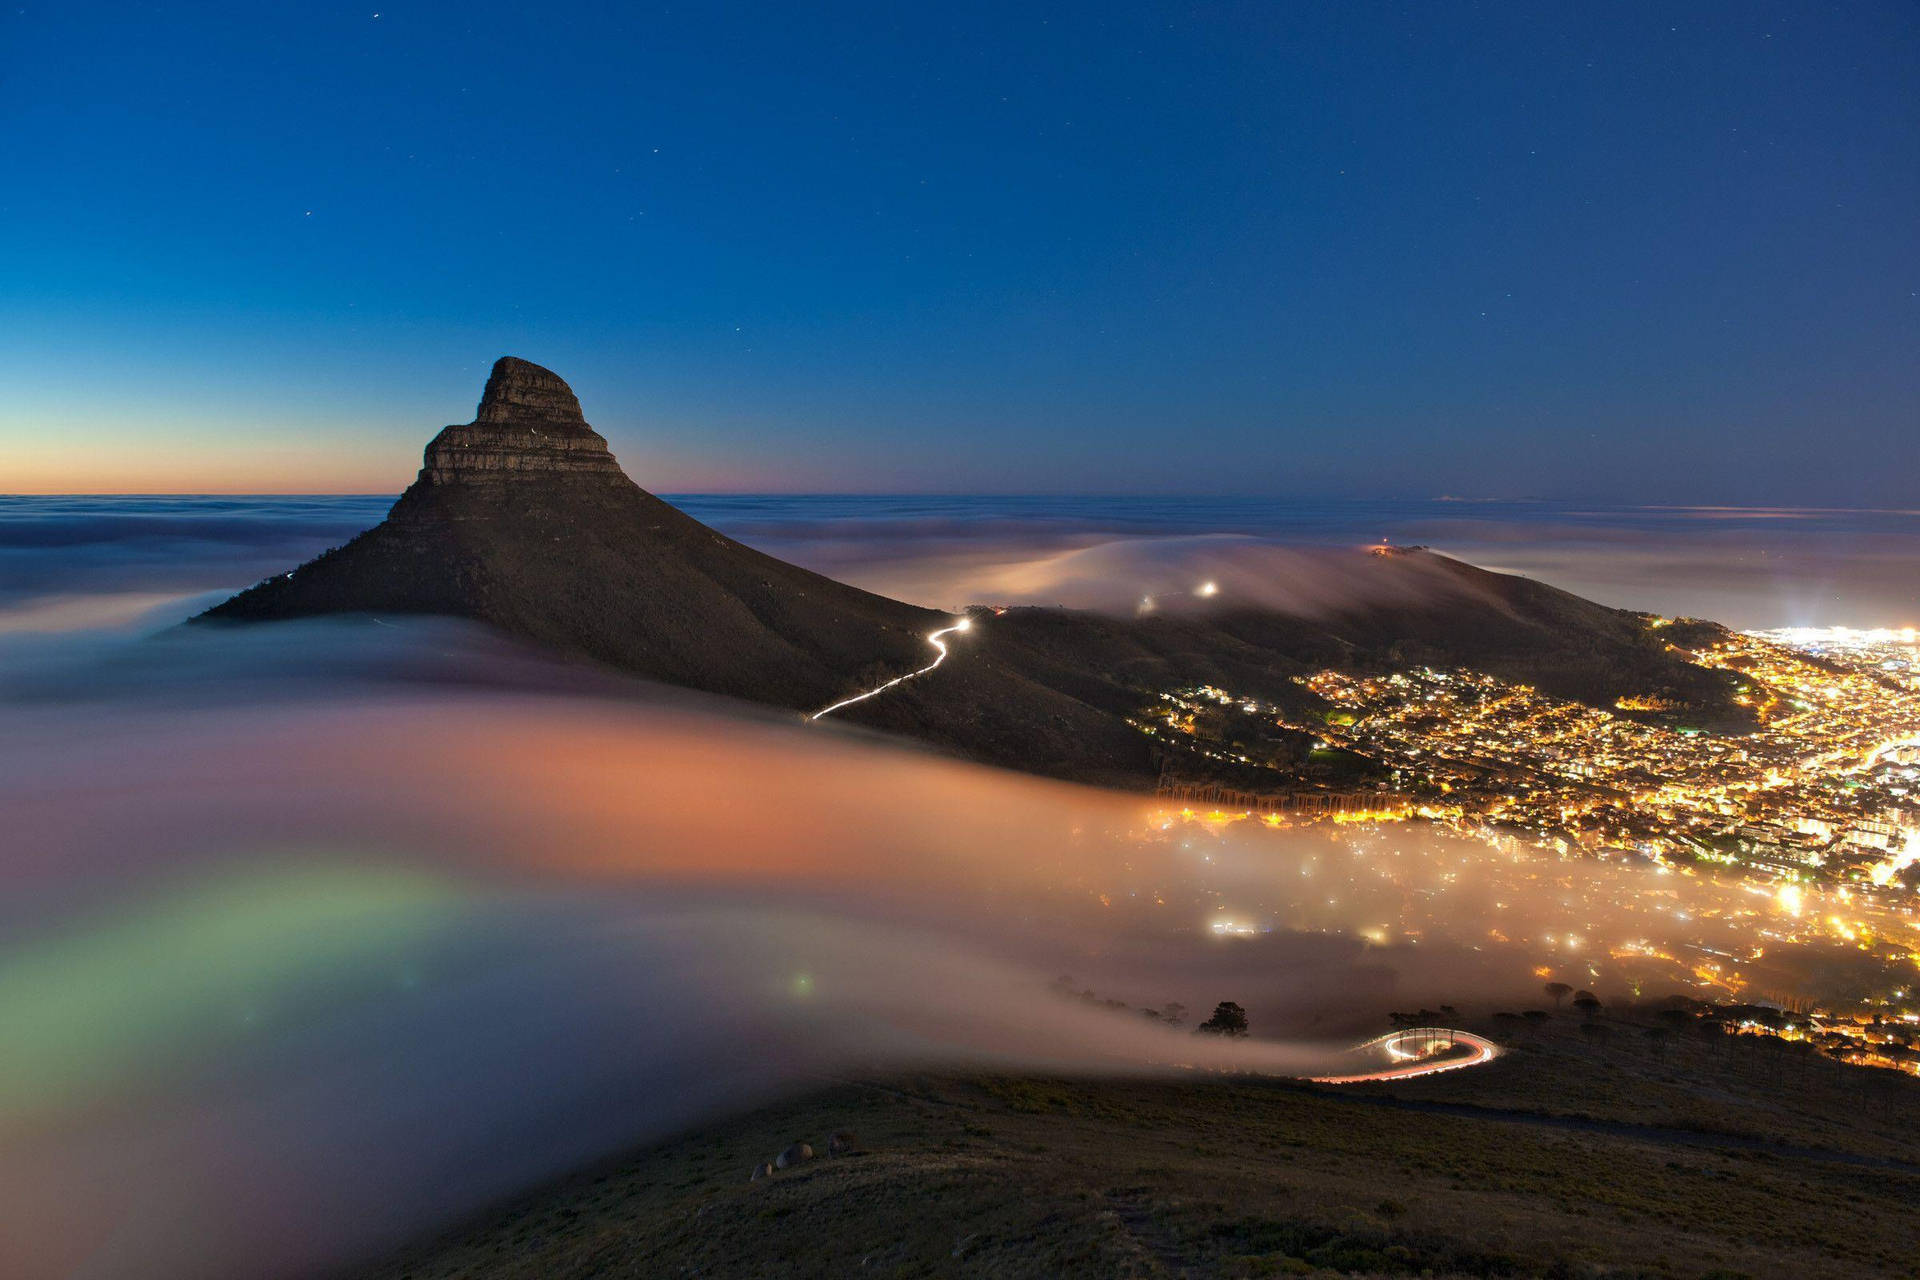 South Africa In A Foggy Scene